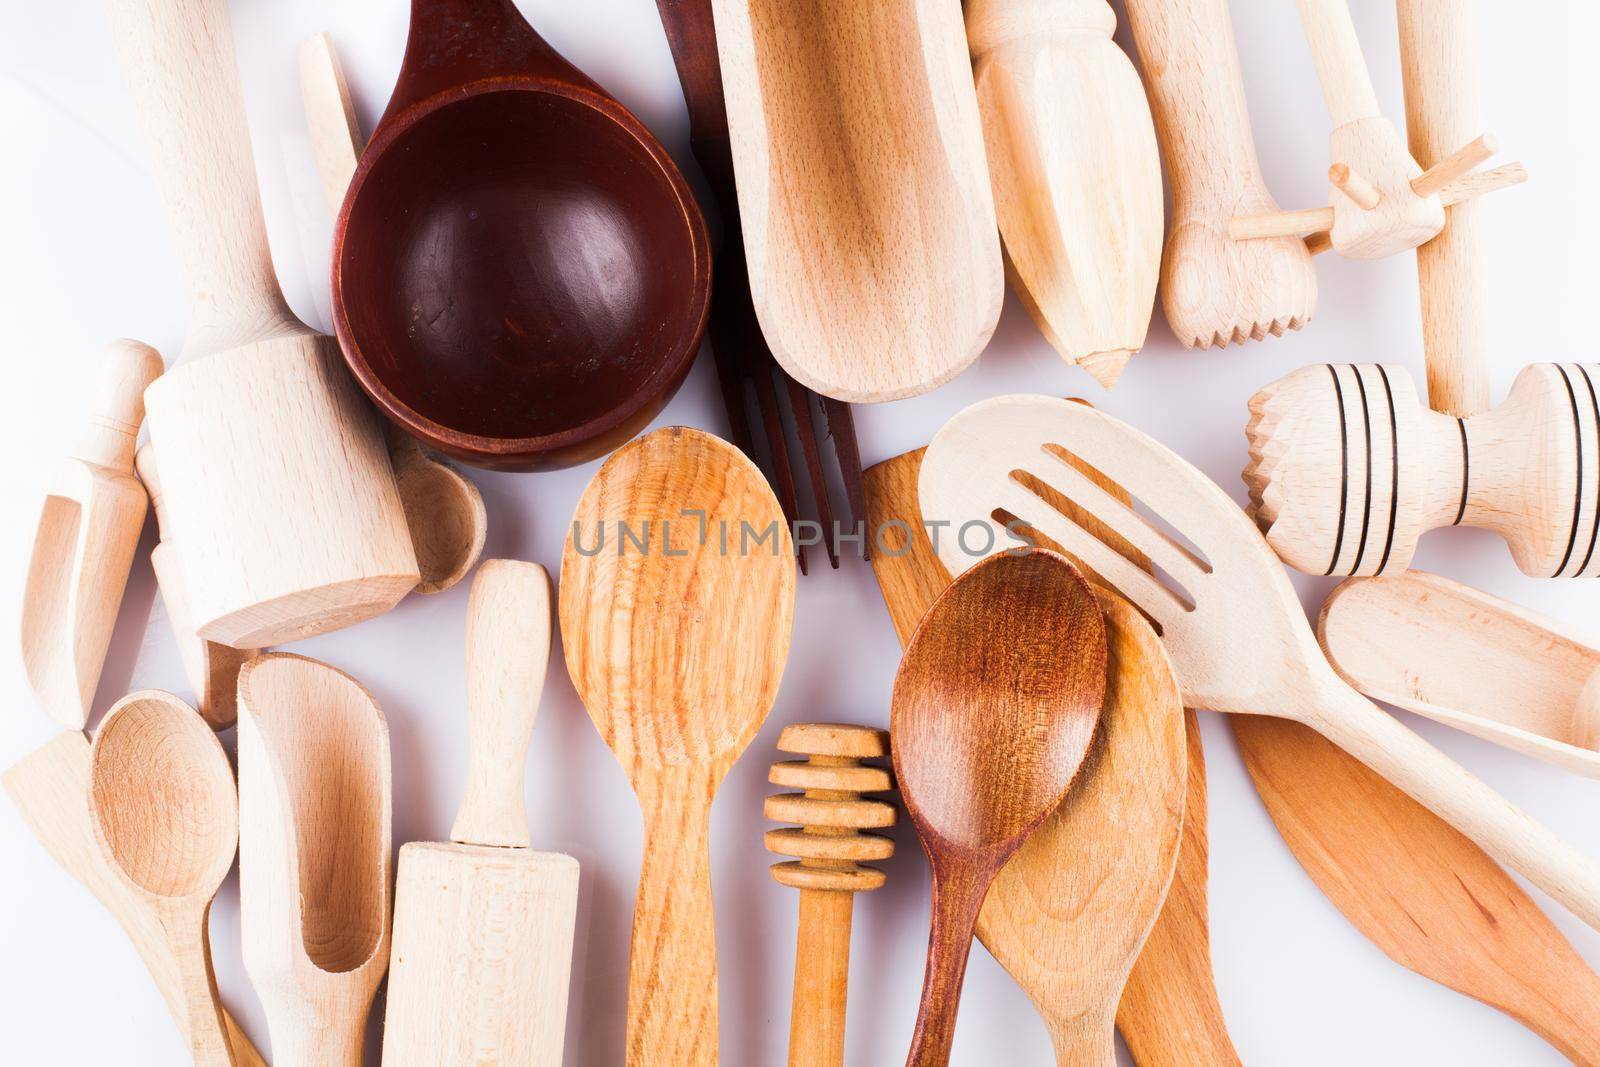 Assortment of wooden kitchen utensils on a white background